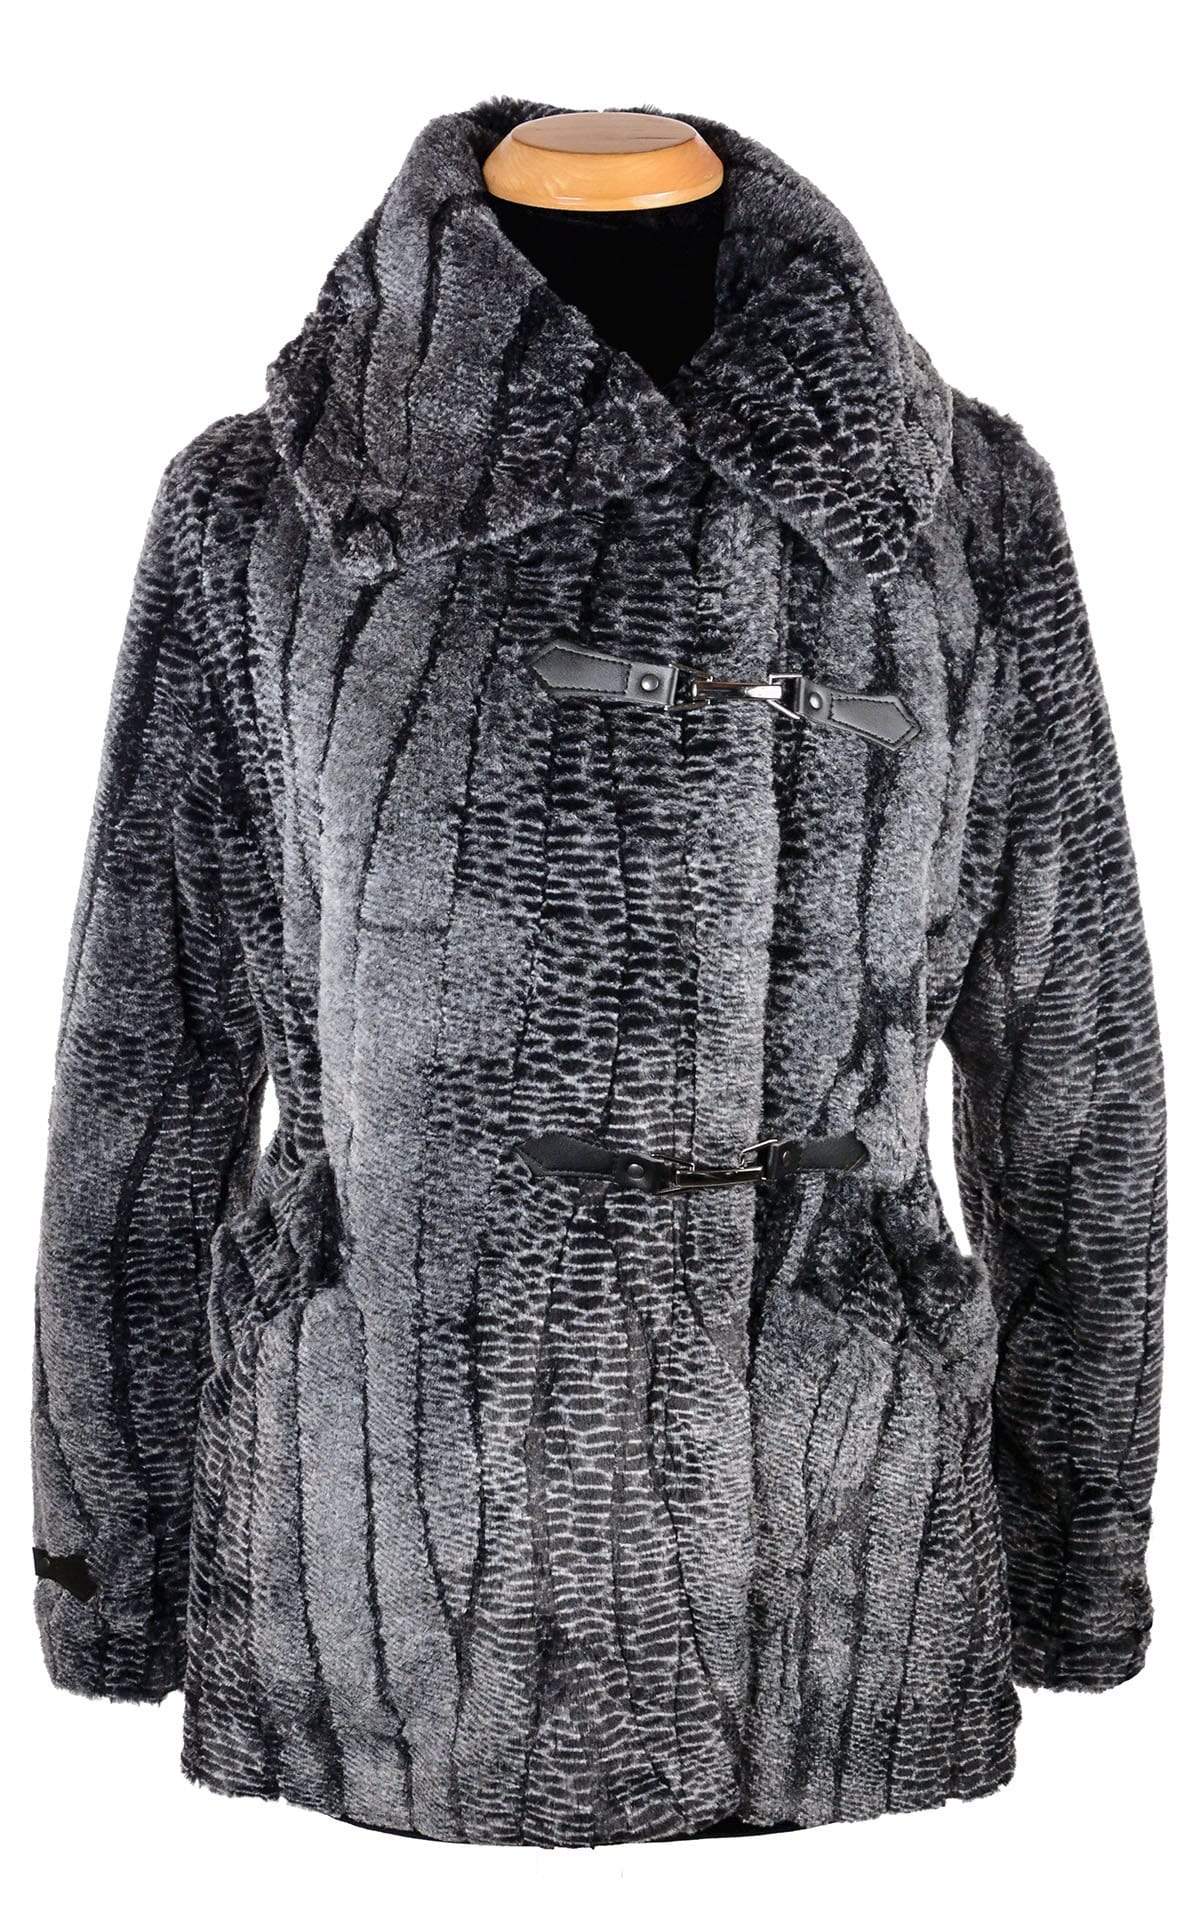 Dietrich Coat | Rattle Snake Faux Fur Pea Coat | Featuring Buckle Clasps | Handmade in Seattle, WA | Pandemonium Millinery